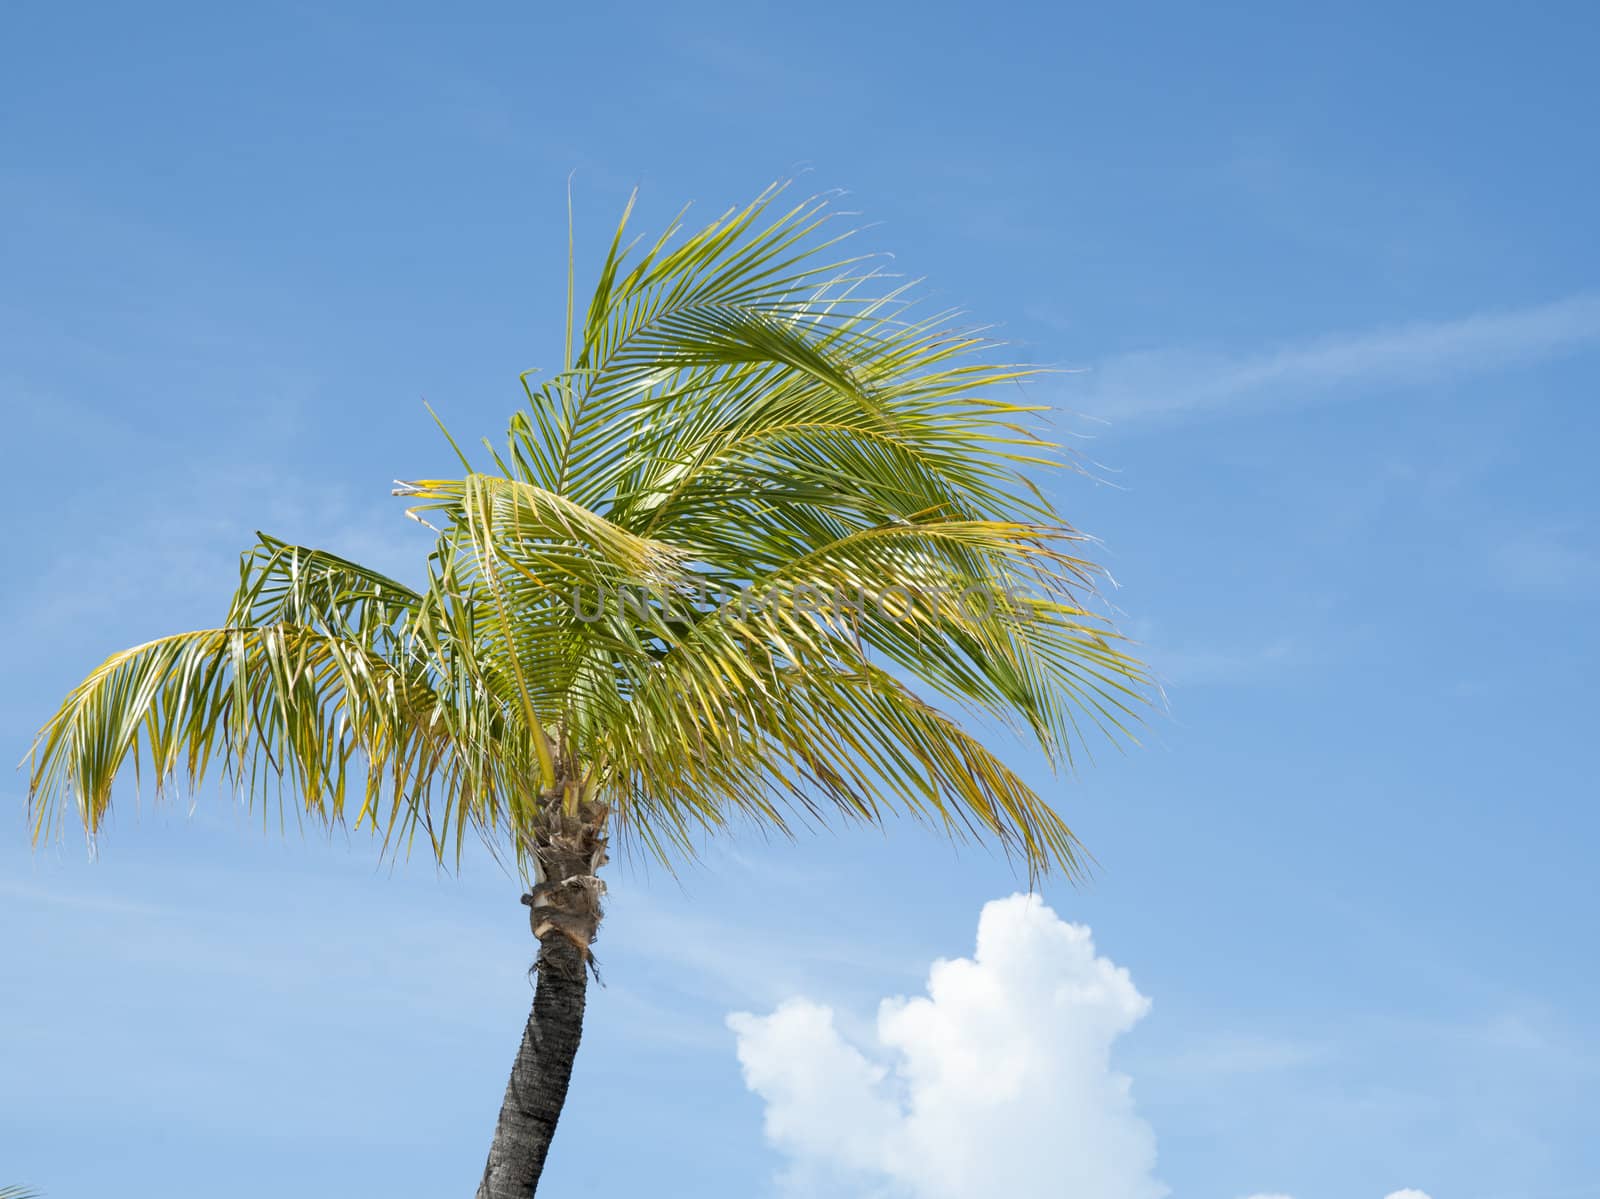 Palm tree innbreeze, against blue sky.